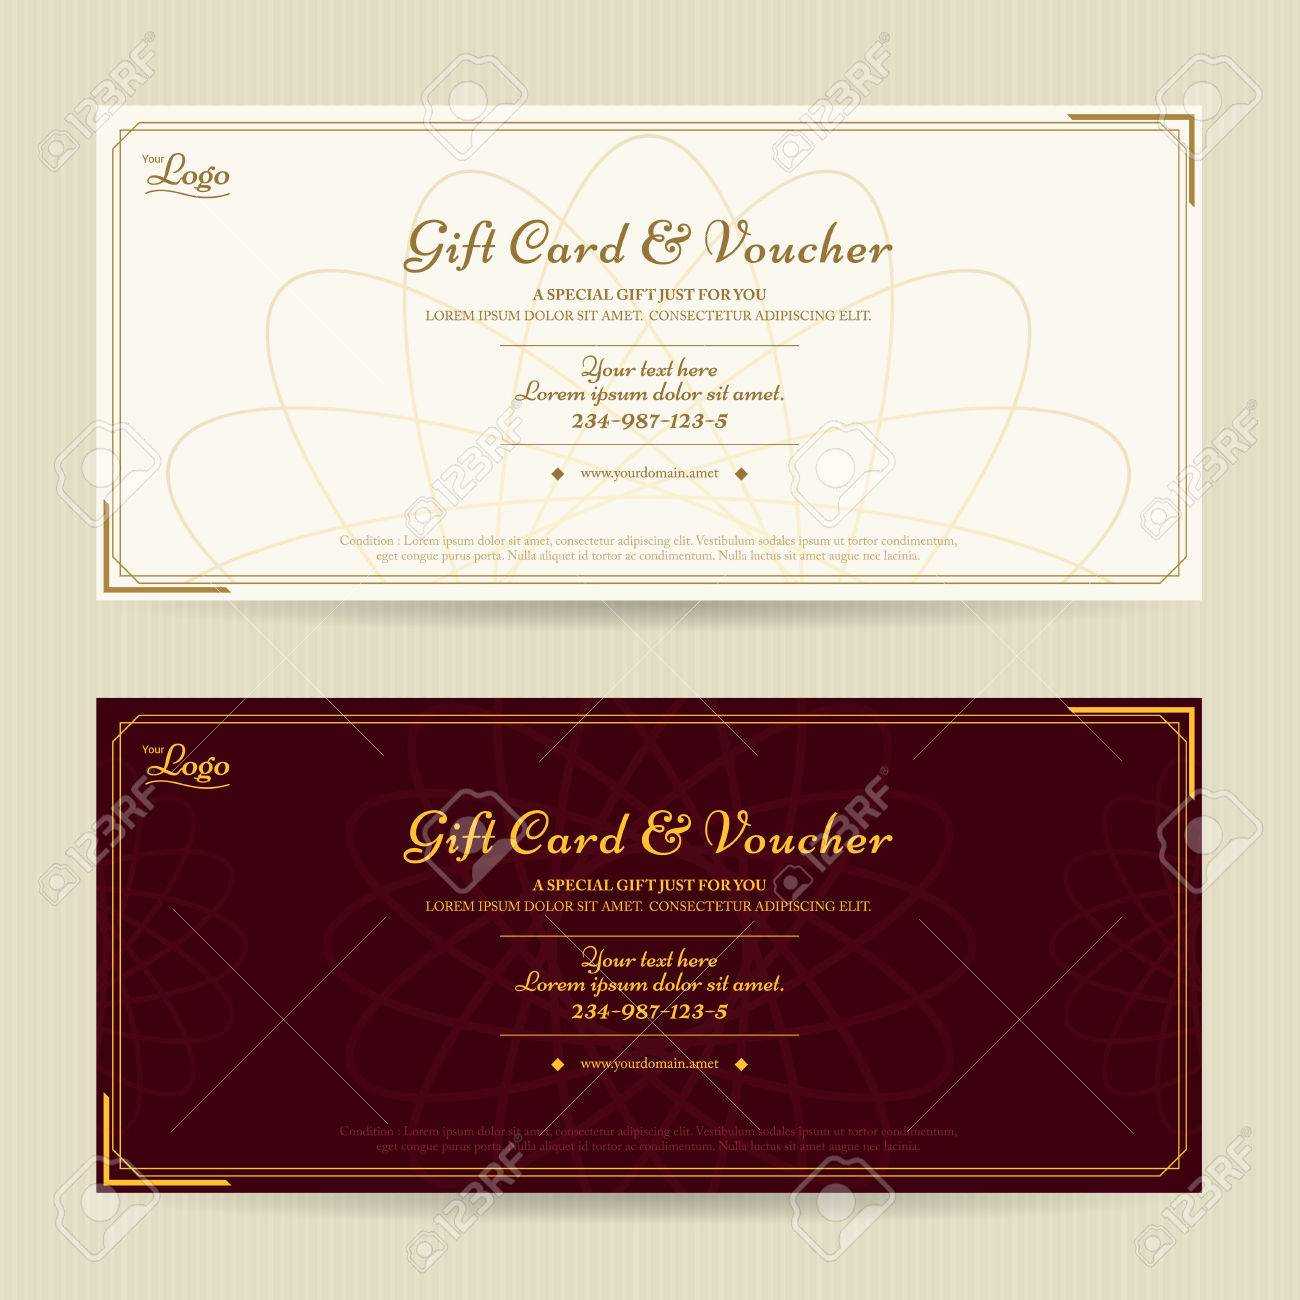 Elegant Gift Voucher Or Gift Card Template With Gold Border Inside Elegant Gift Certificate Template